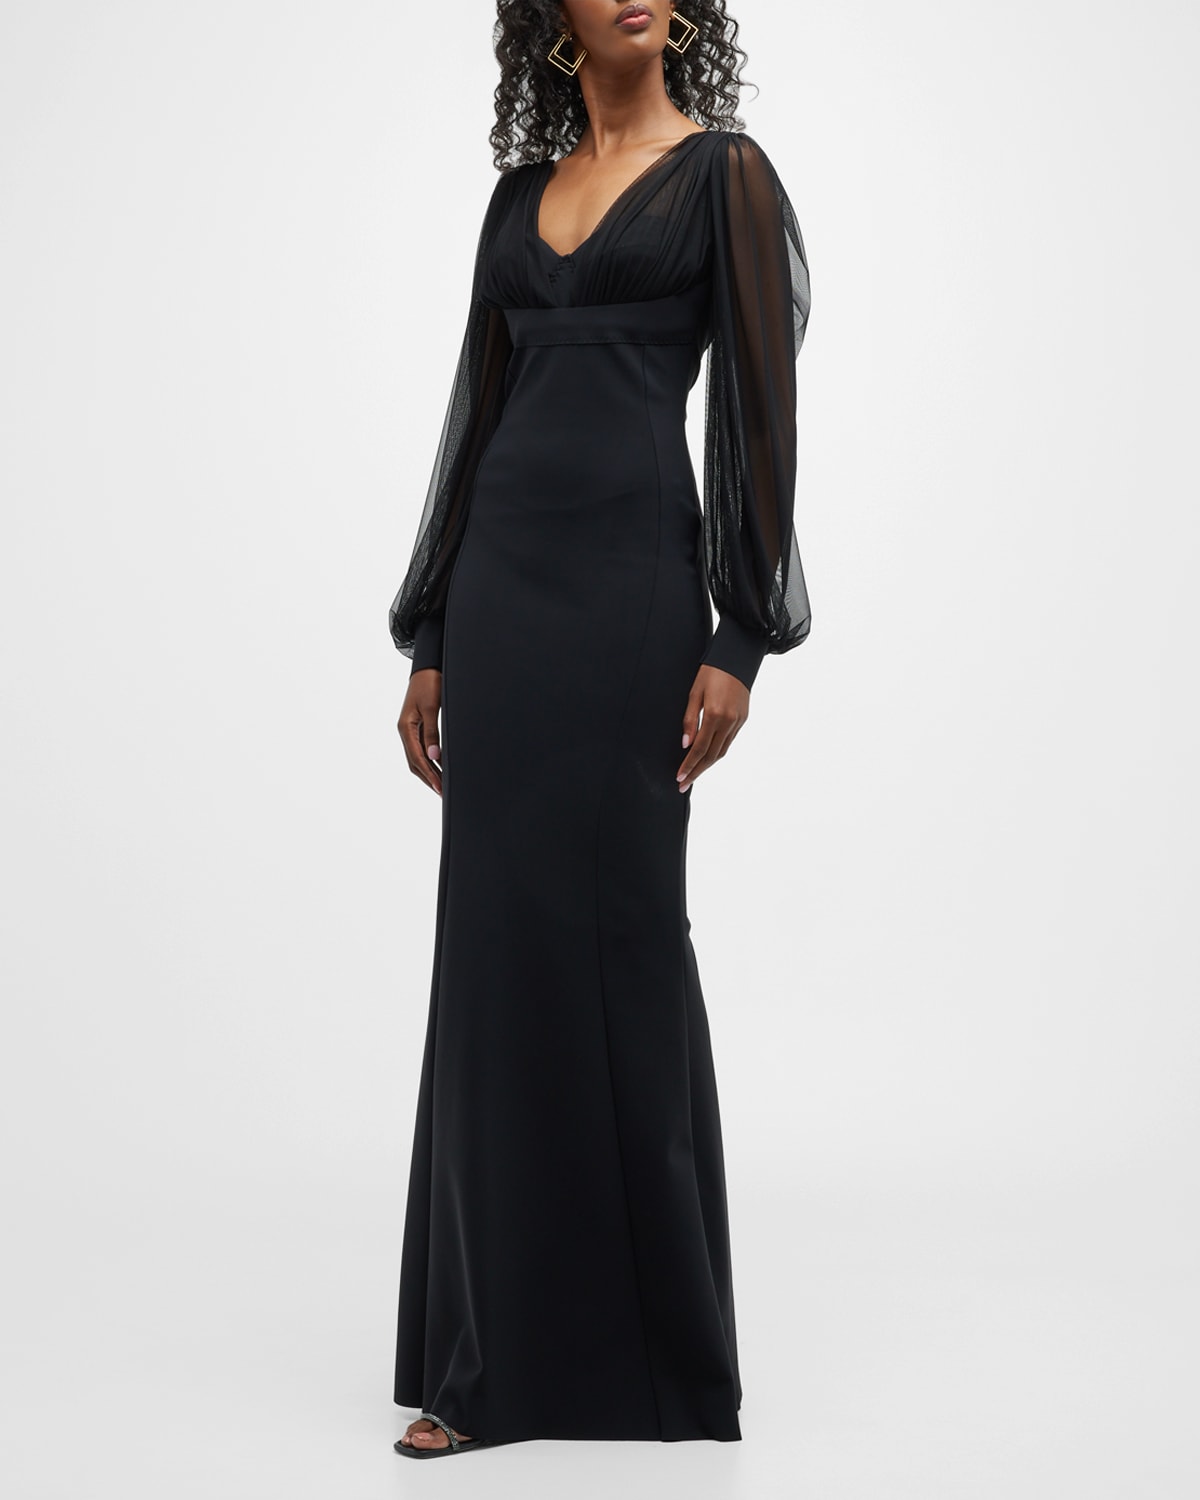 Chiara Boni La Petite Robe Kacey Illusion-Sleeve Cape Gown | Neiman Marcus